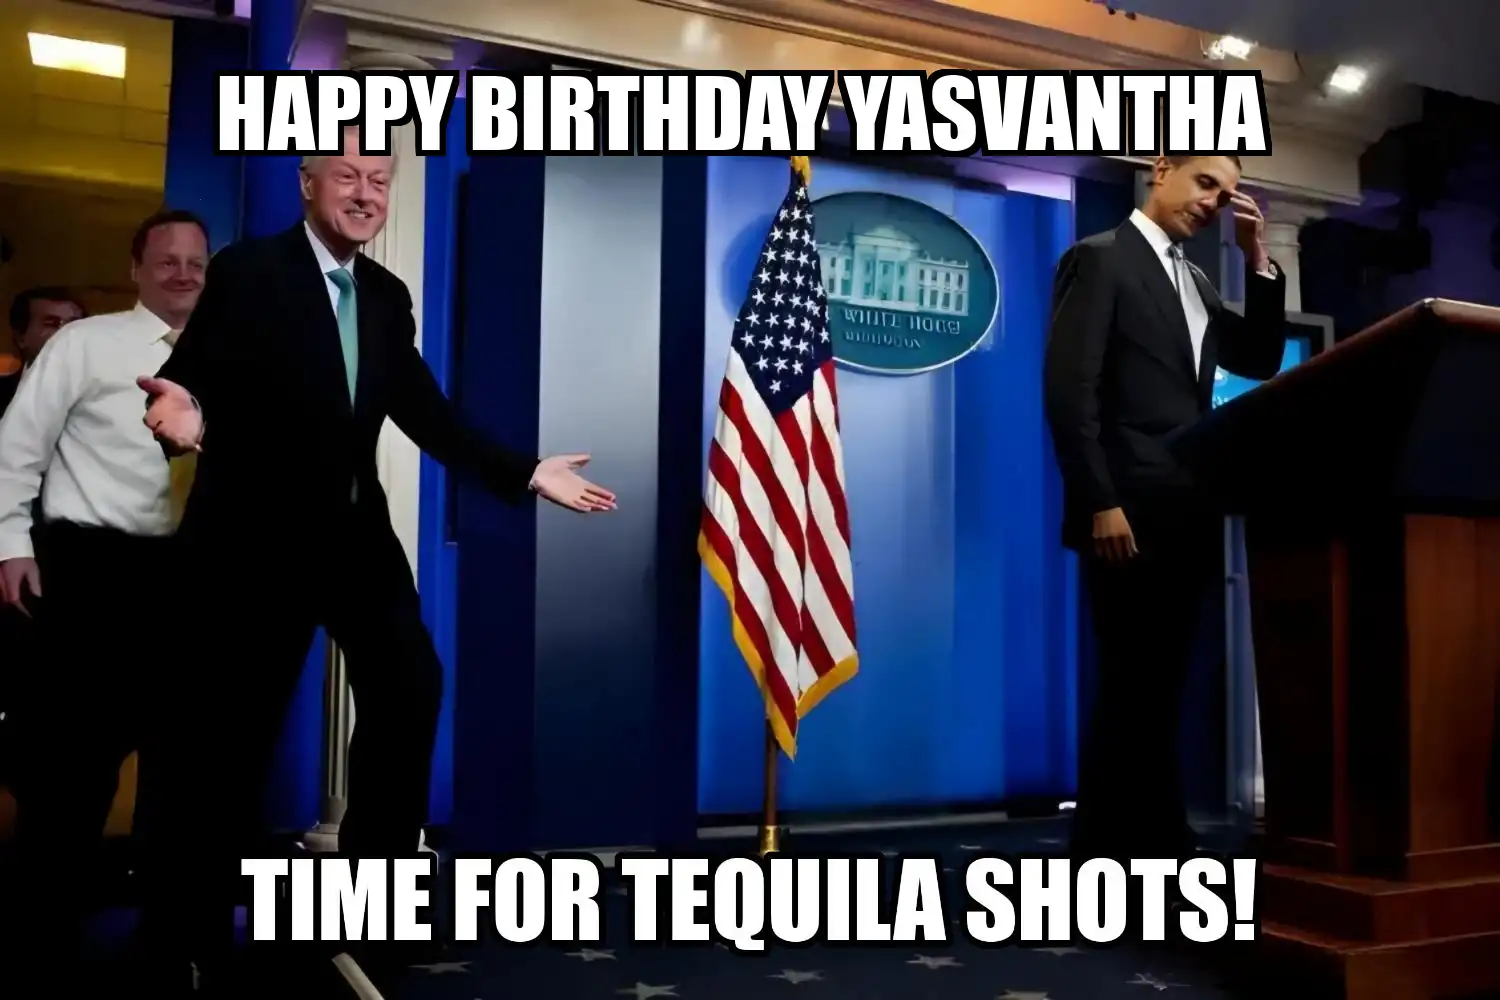 Happy Birthday Yasvantha Time For Tequila Shots Memes